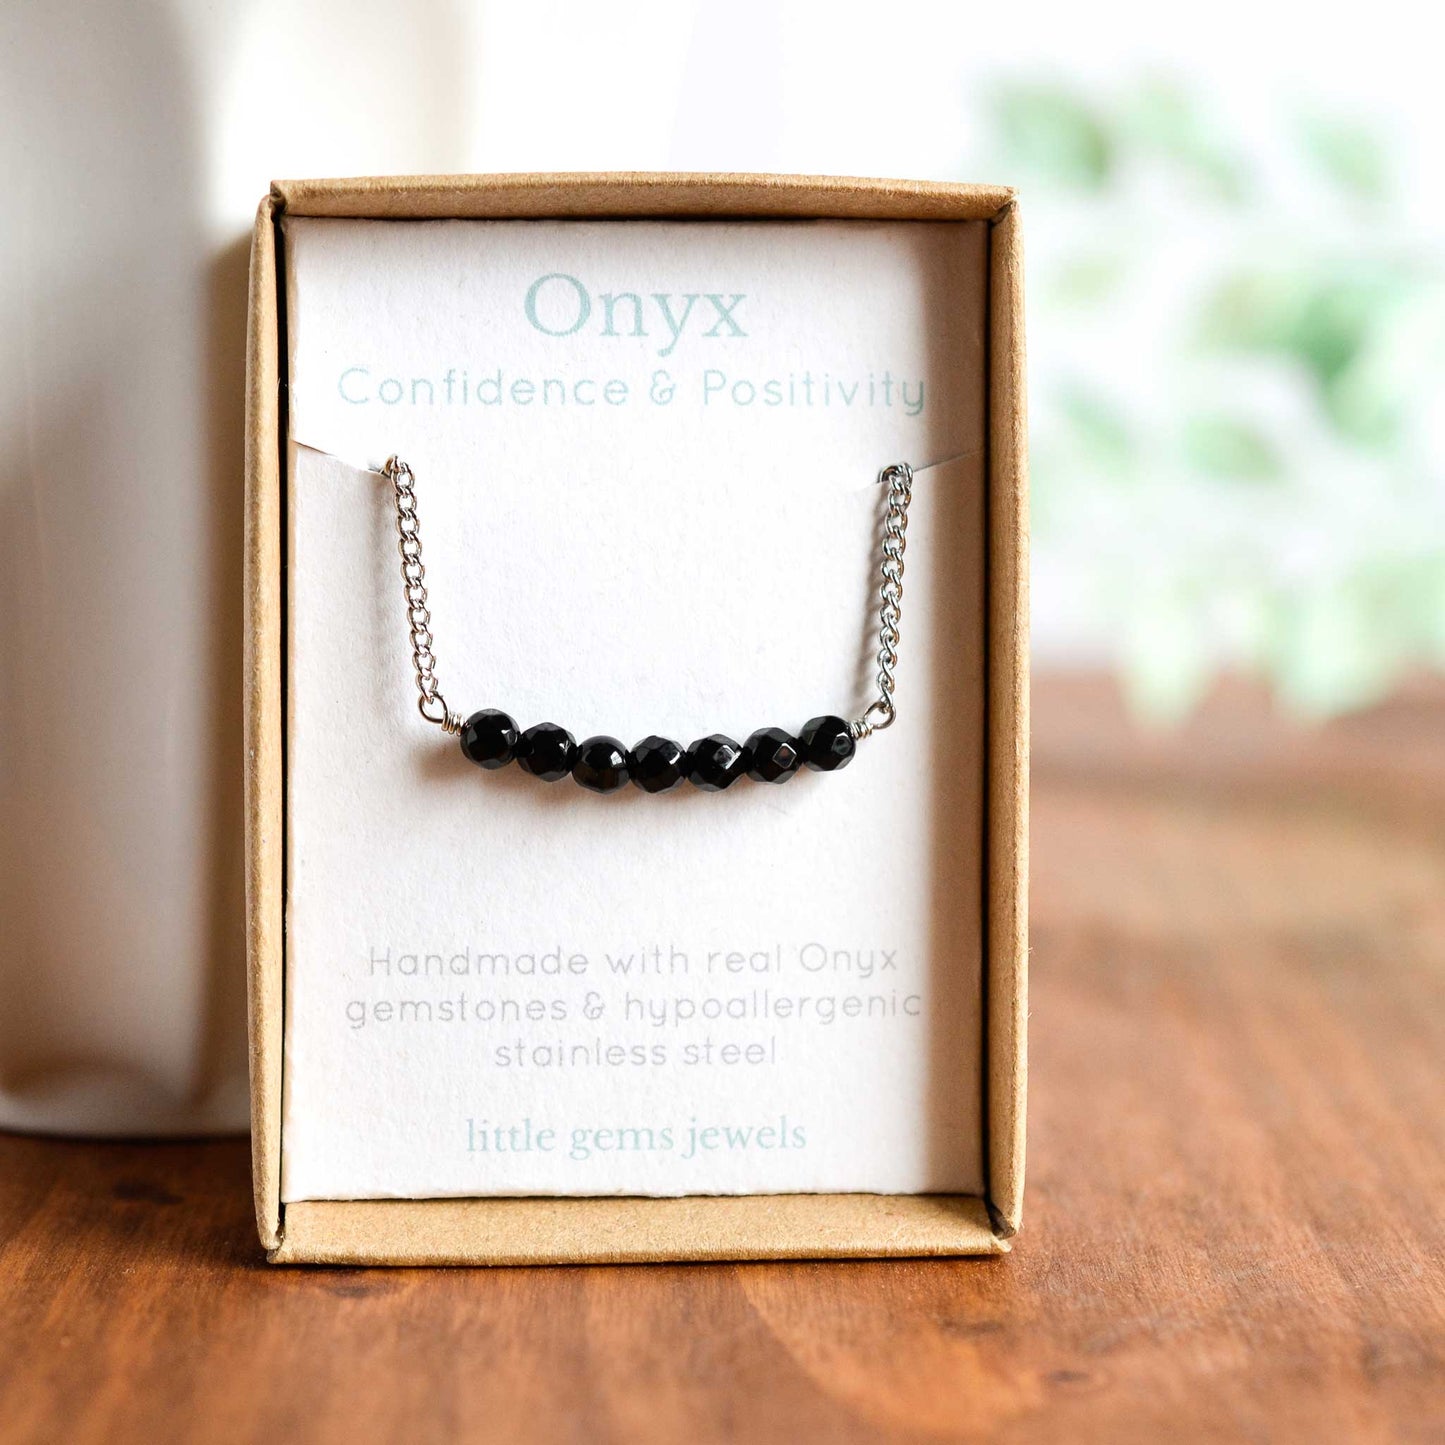 Dainty black Onyx gemstone necklace in gift box